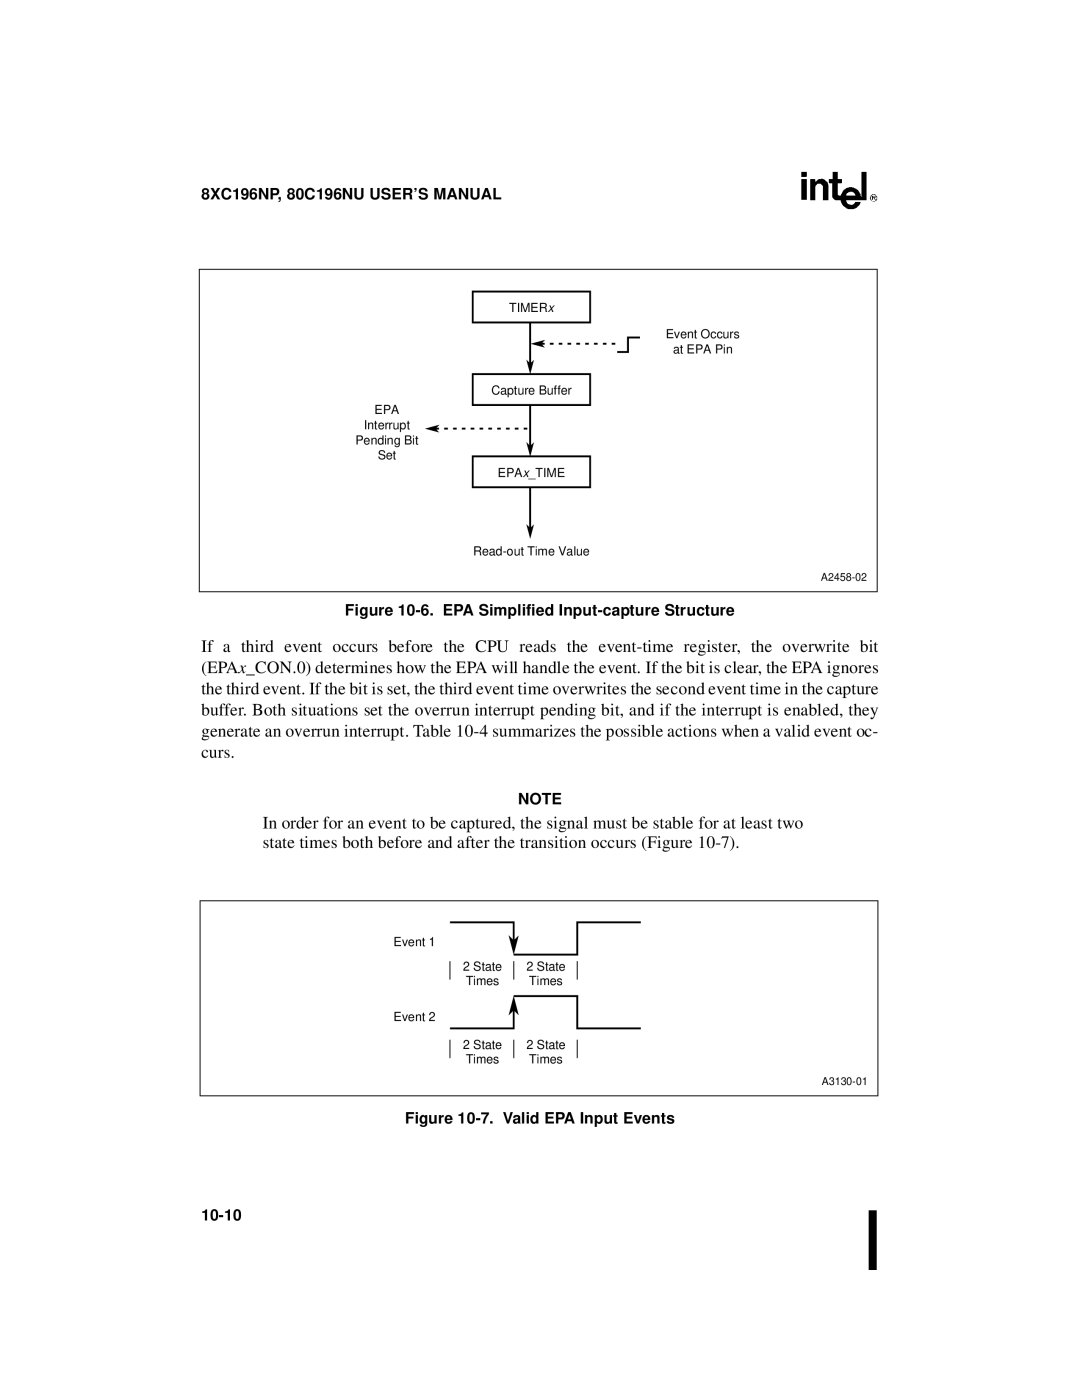 Intel 80C196NU, 8XC196NP, Microcontroller manual EPA Simplified Input-capture Structure 